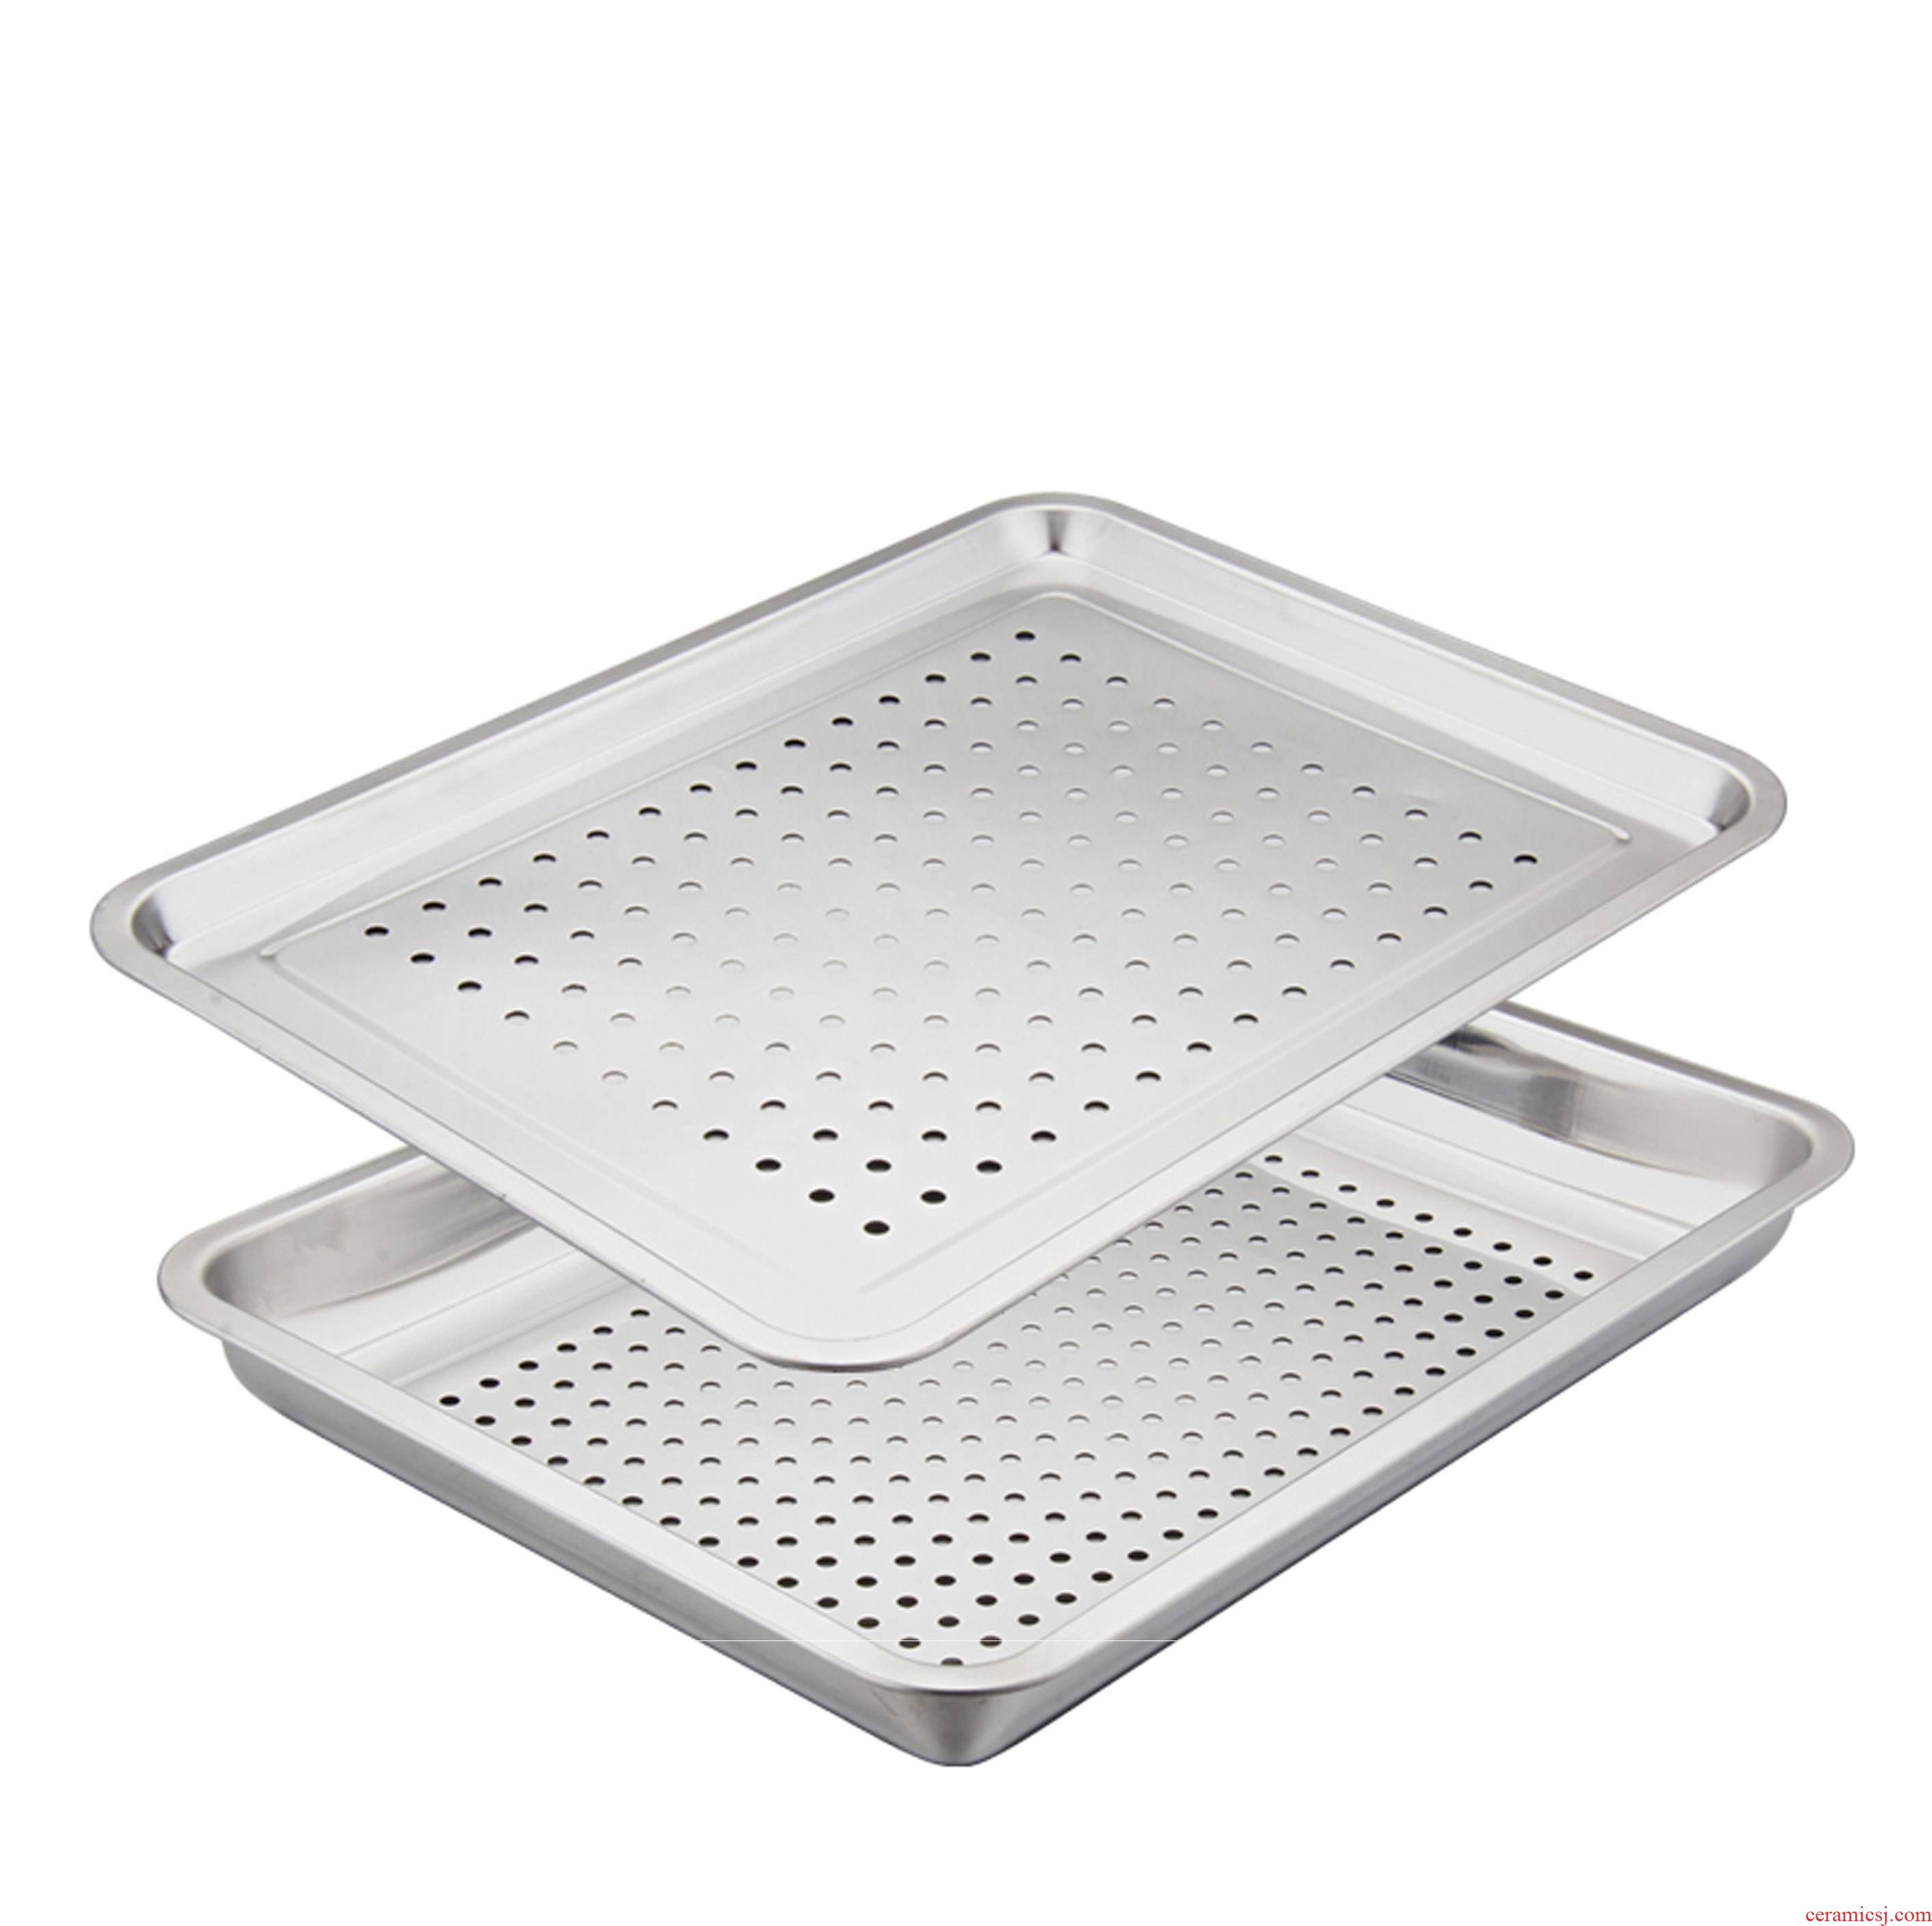 Stainless steel tea tray leakage dish square plate Stainless steel plate rectangular plate tray tea drop 40 * 30 leakage